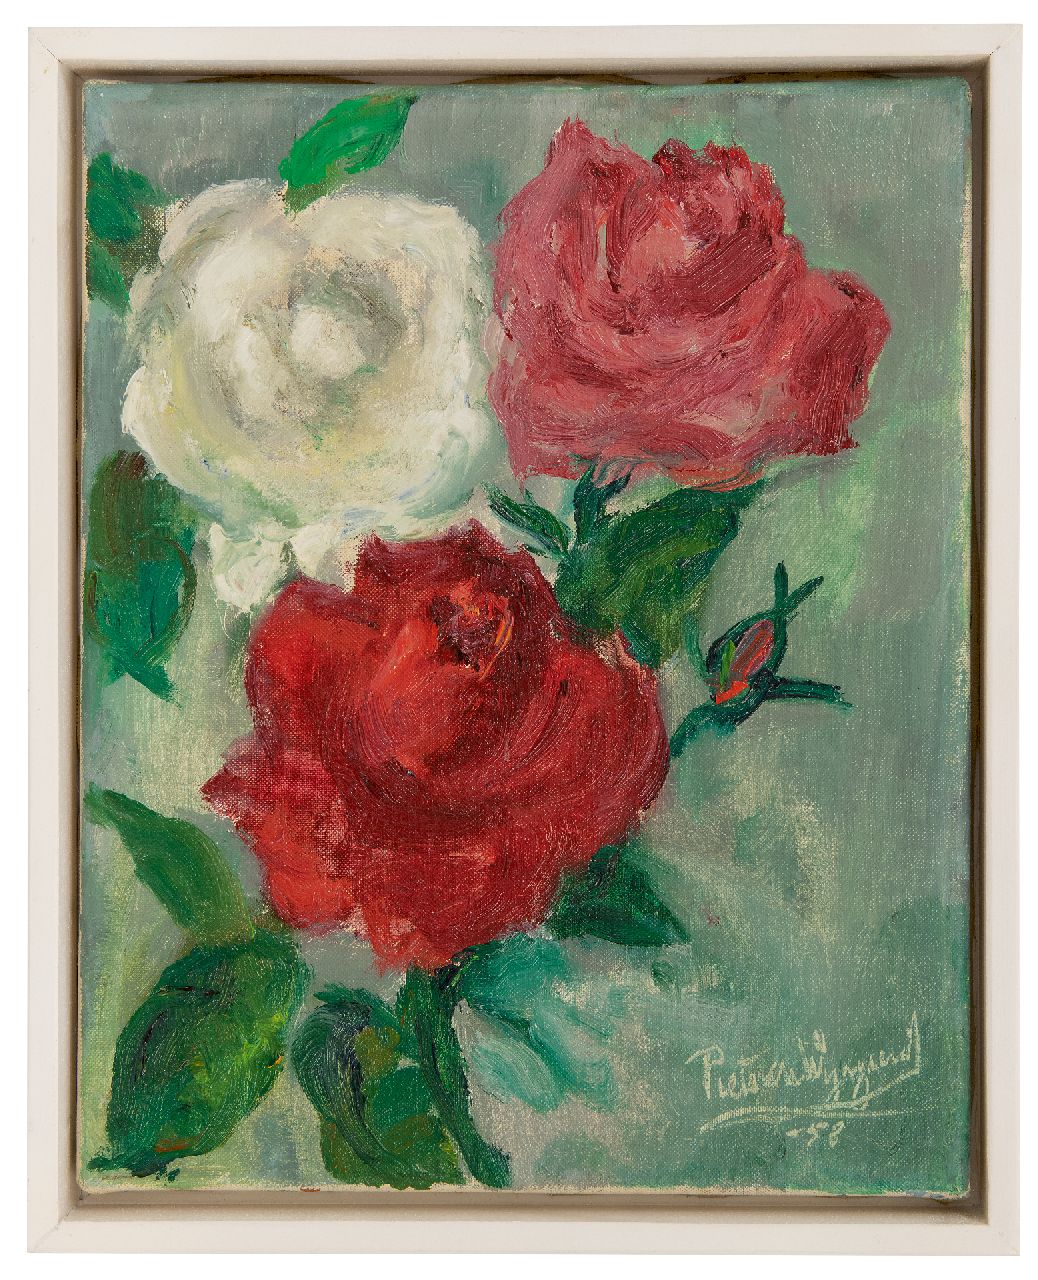 Wijngaerdt P.T. van | Petrus Theodorus 'Piet' van Wijngaerdt | Paintings offered for sale | Roses, oil on canvas 28.0 x 22.0 cm, signed l.r. and dated '53